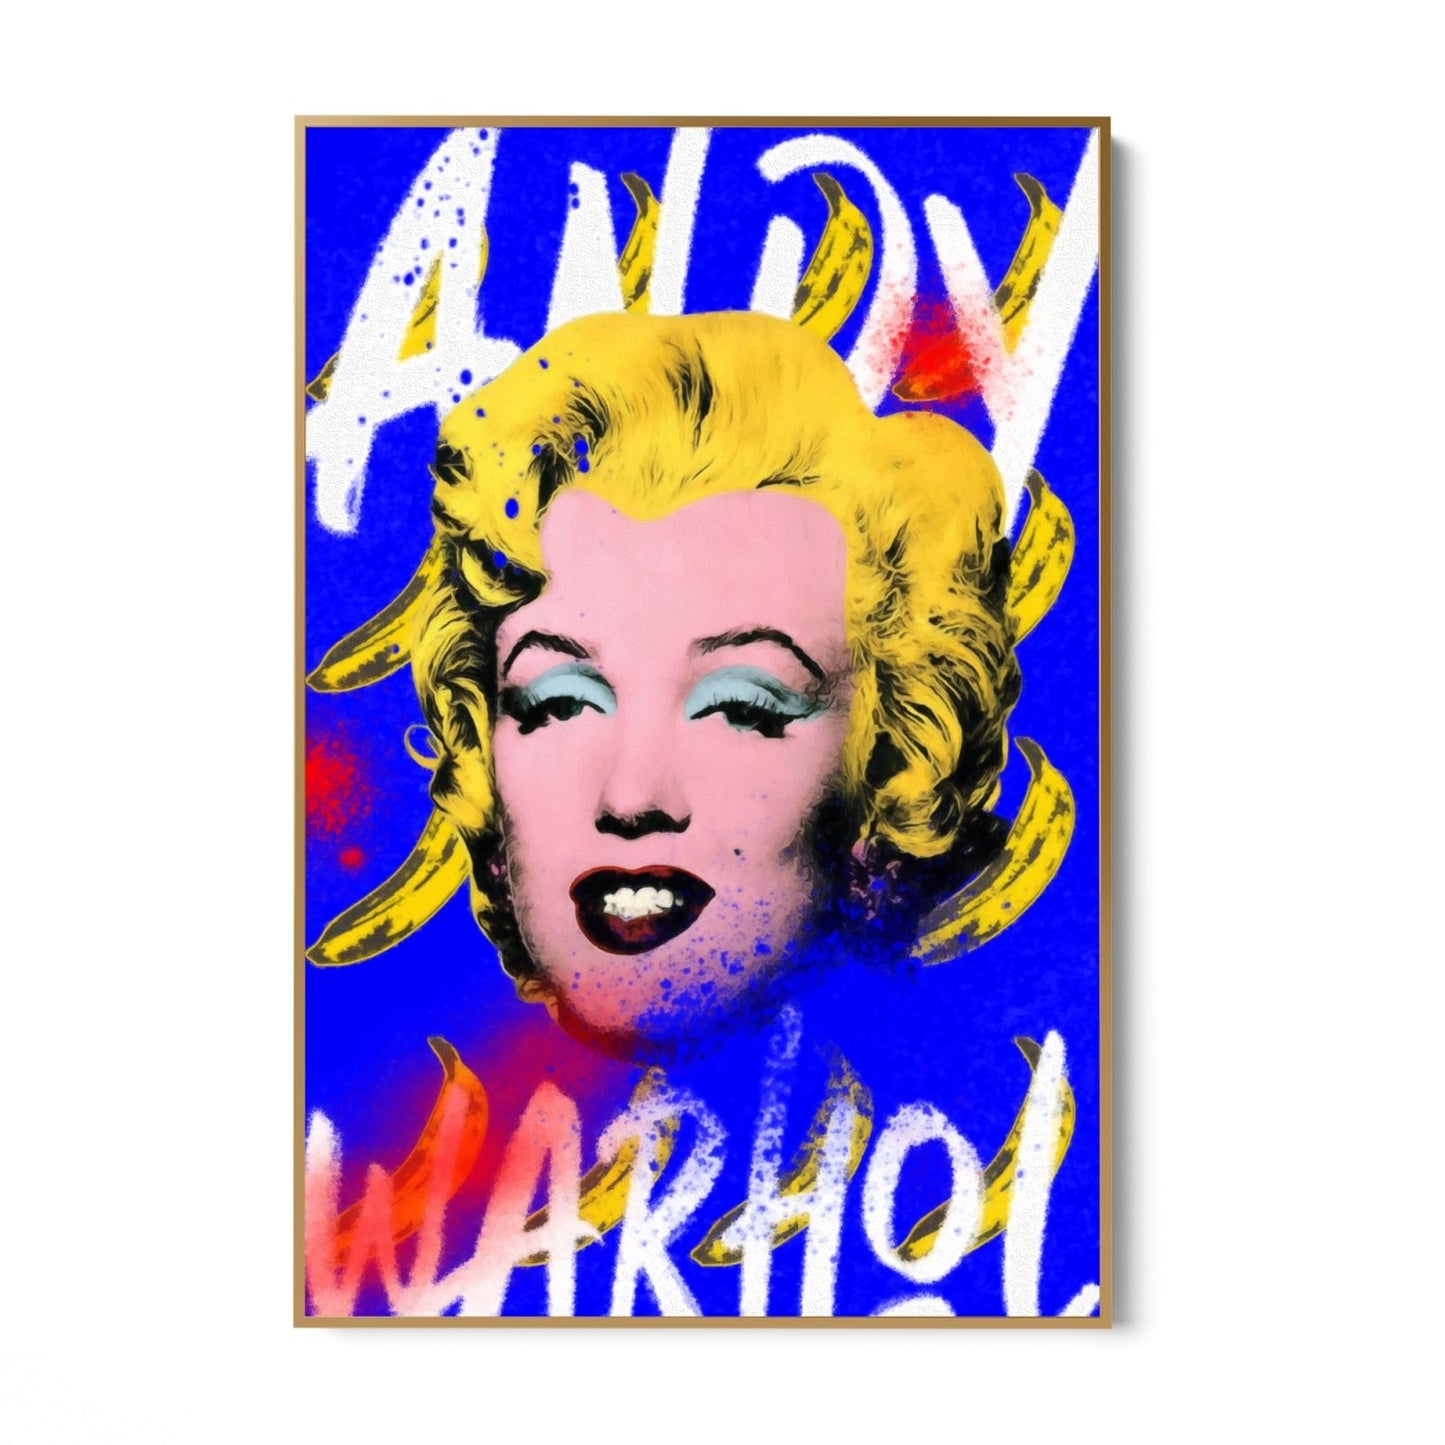 Andy WarholMarylin Monroe